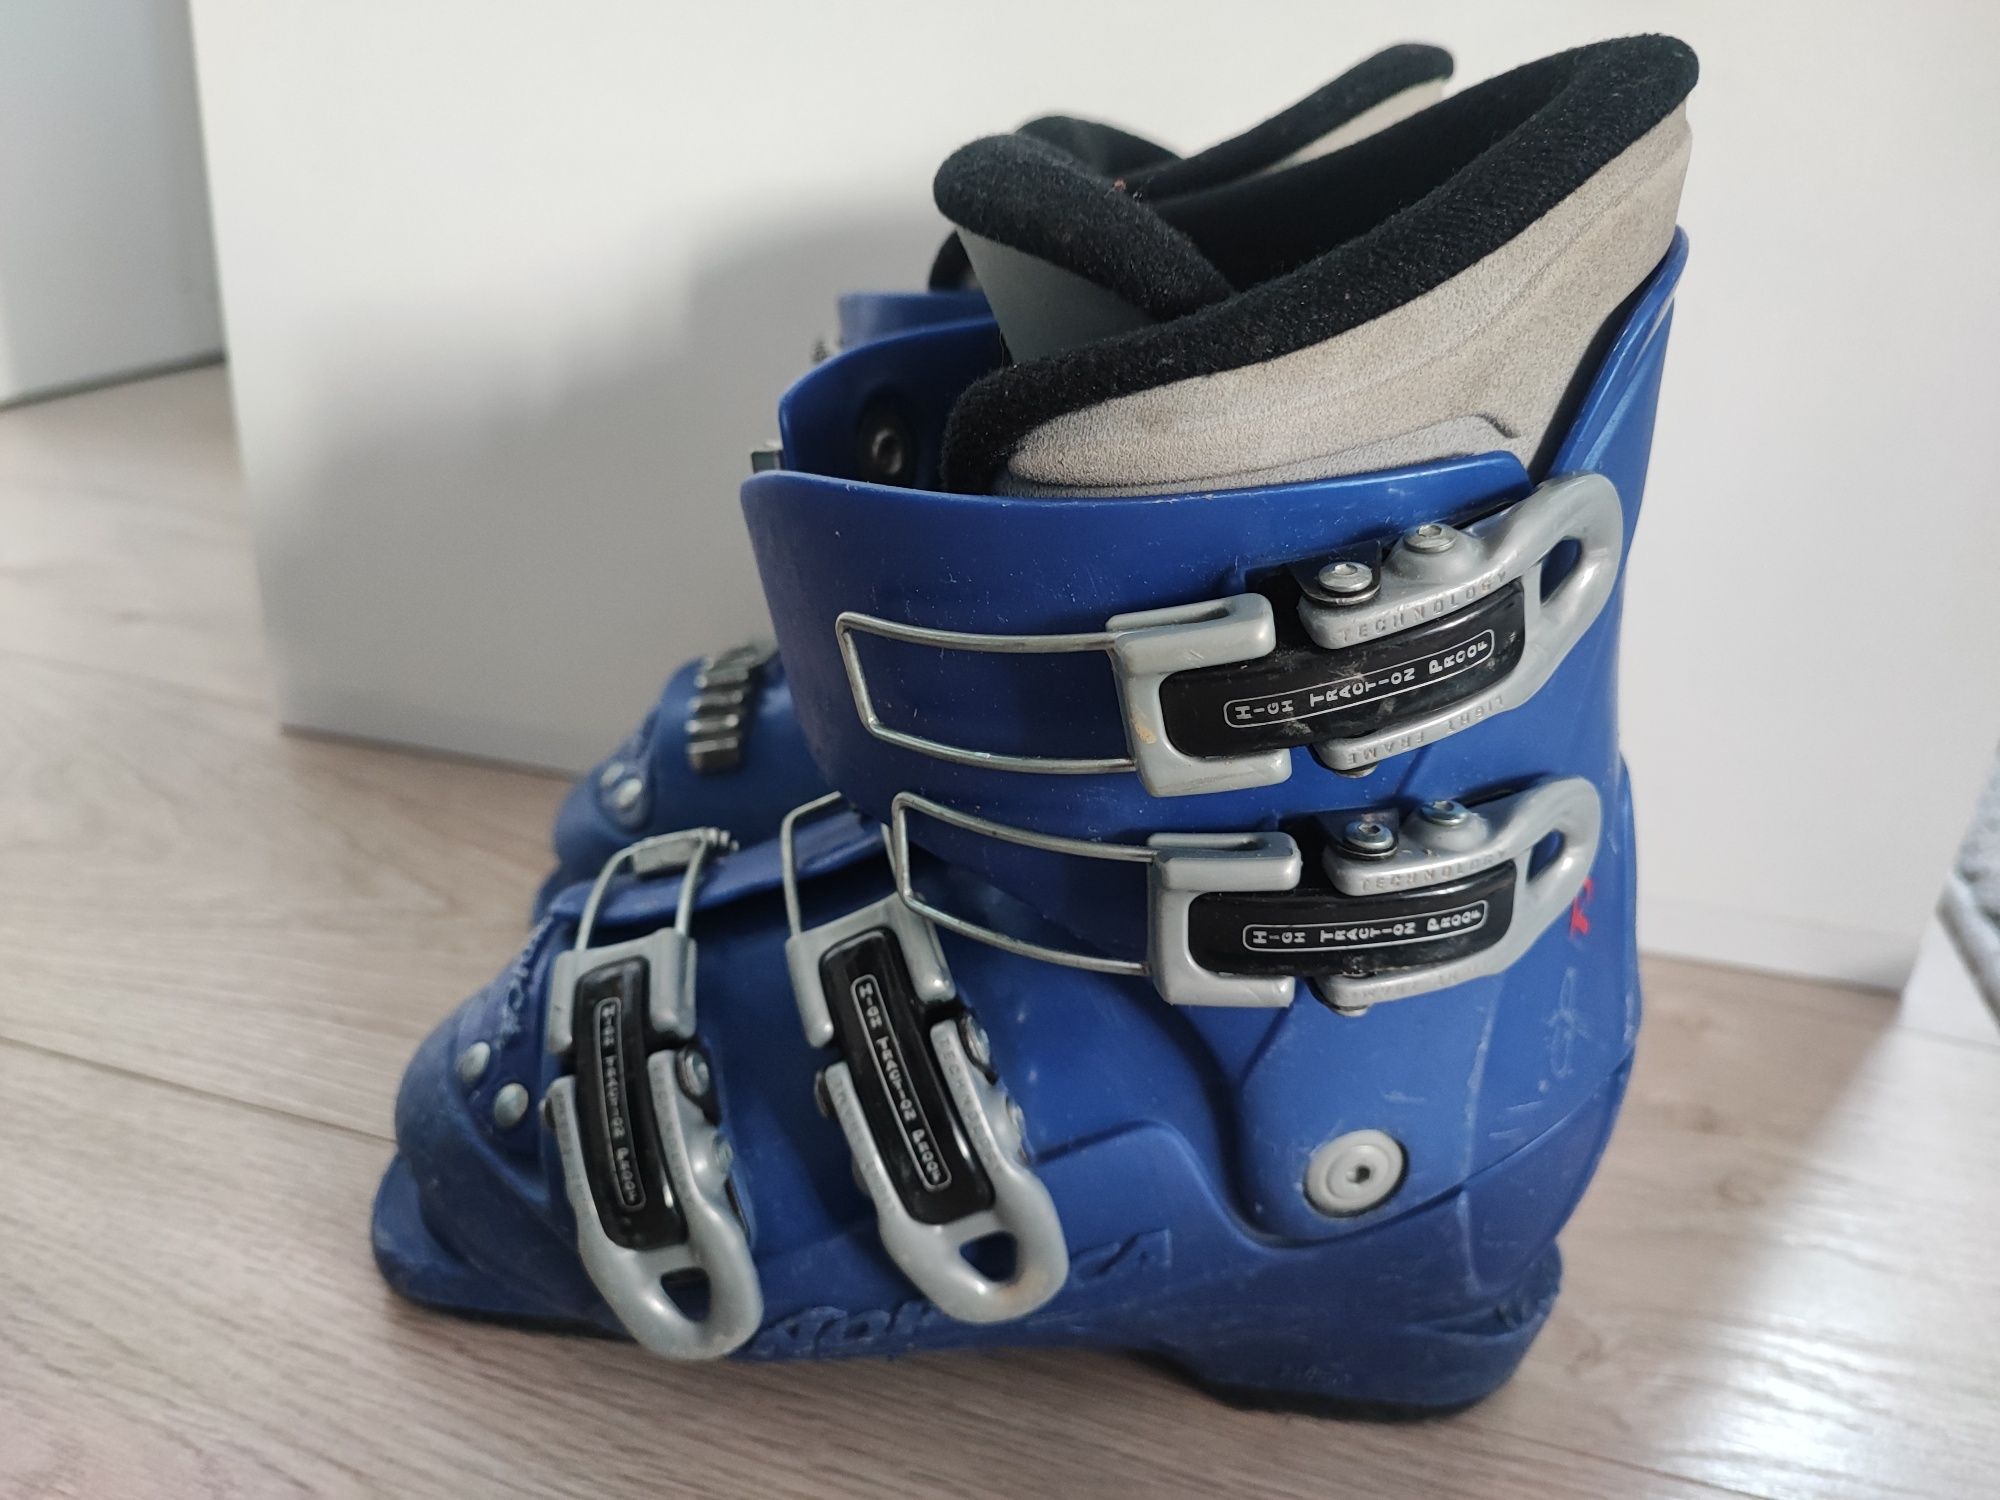 Buty narciarskie Nordica GP TJ, 19,5cm